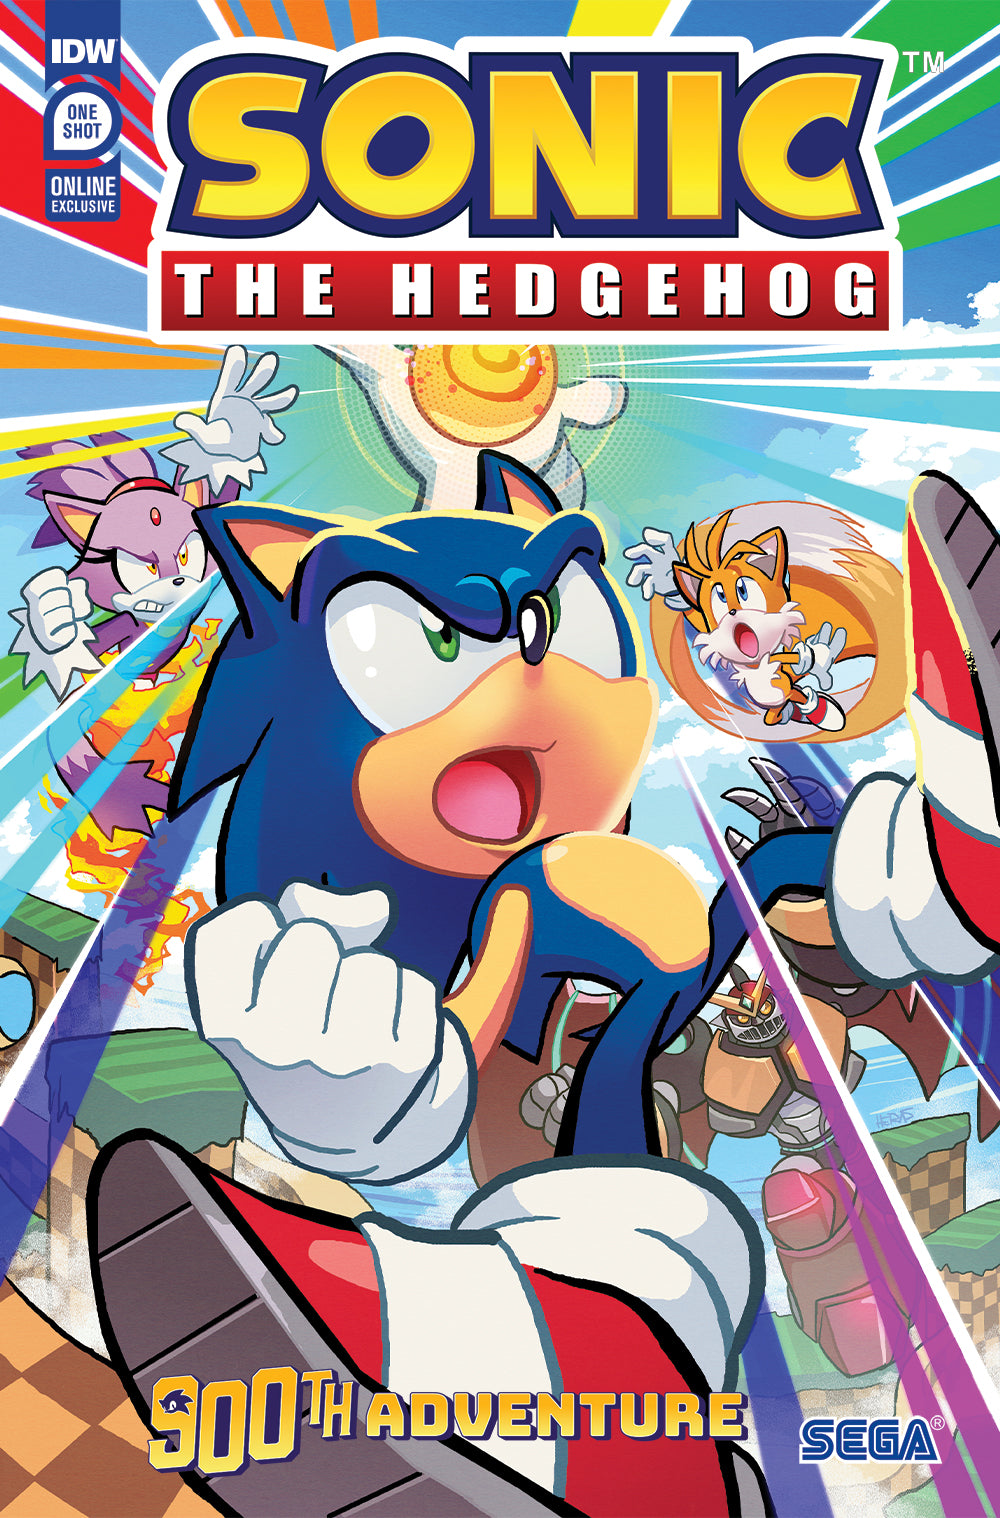 Sonic 2 Character Running Poster – Sega Shop